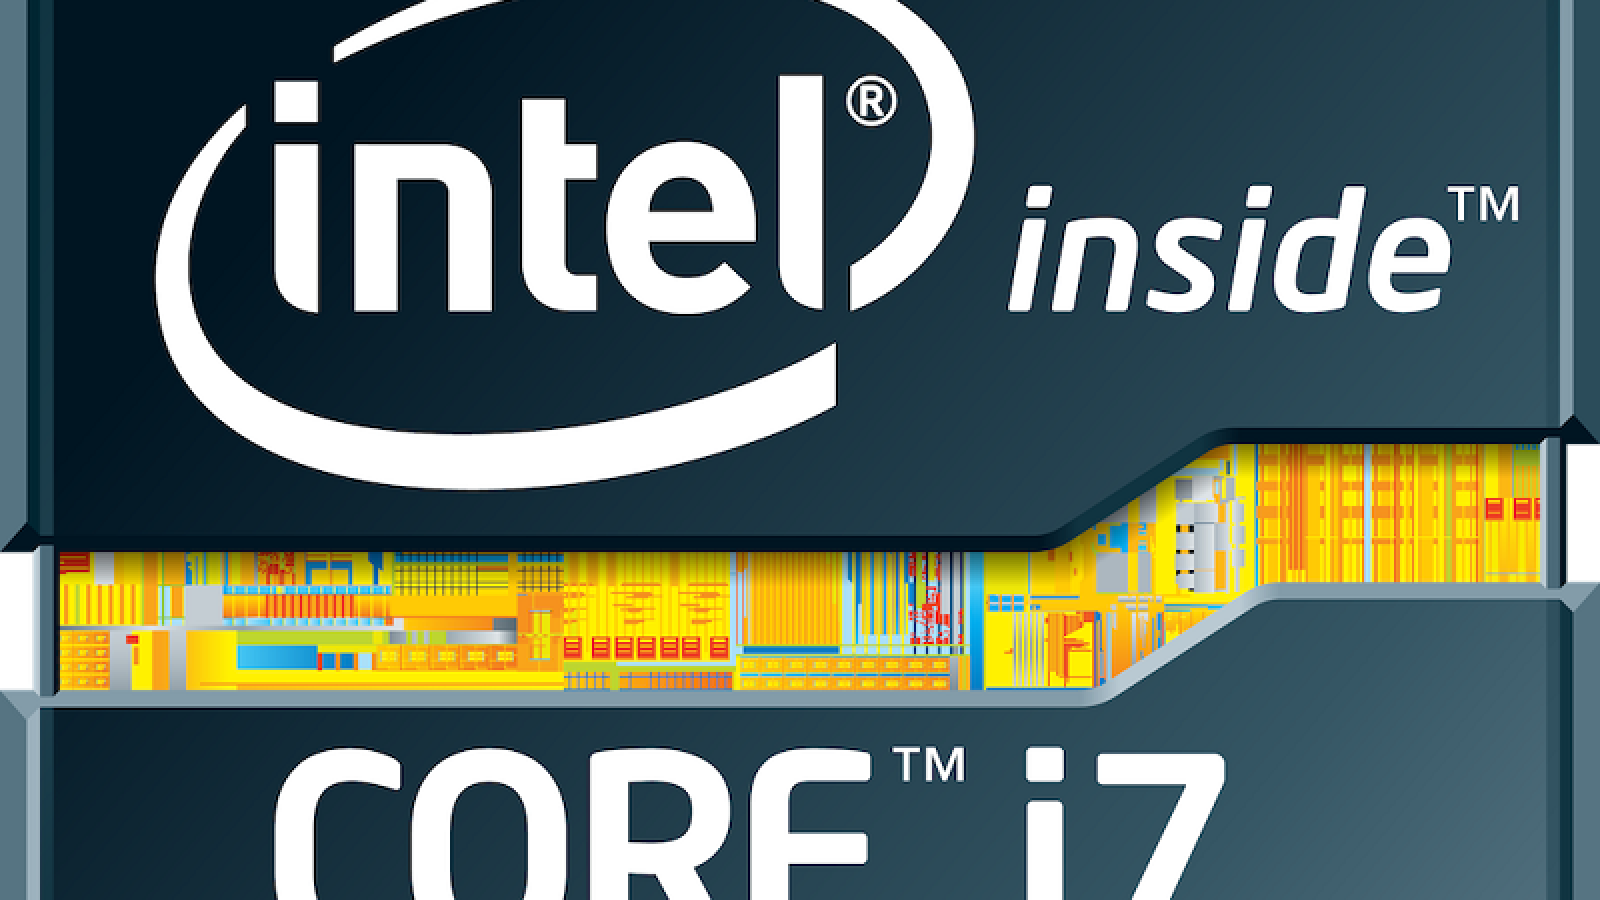 Intel Core i7-6950x